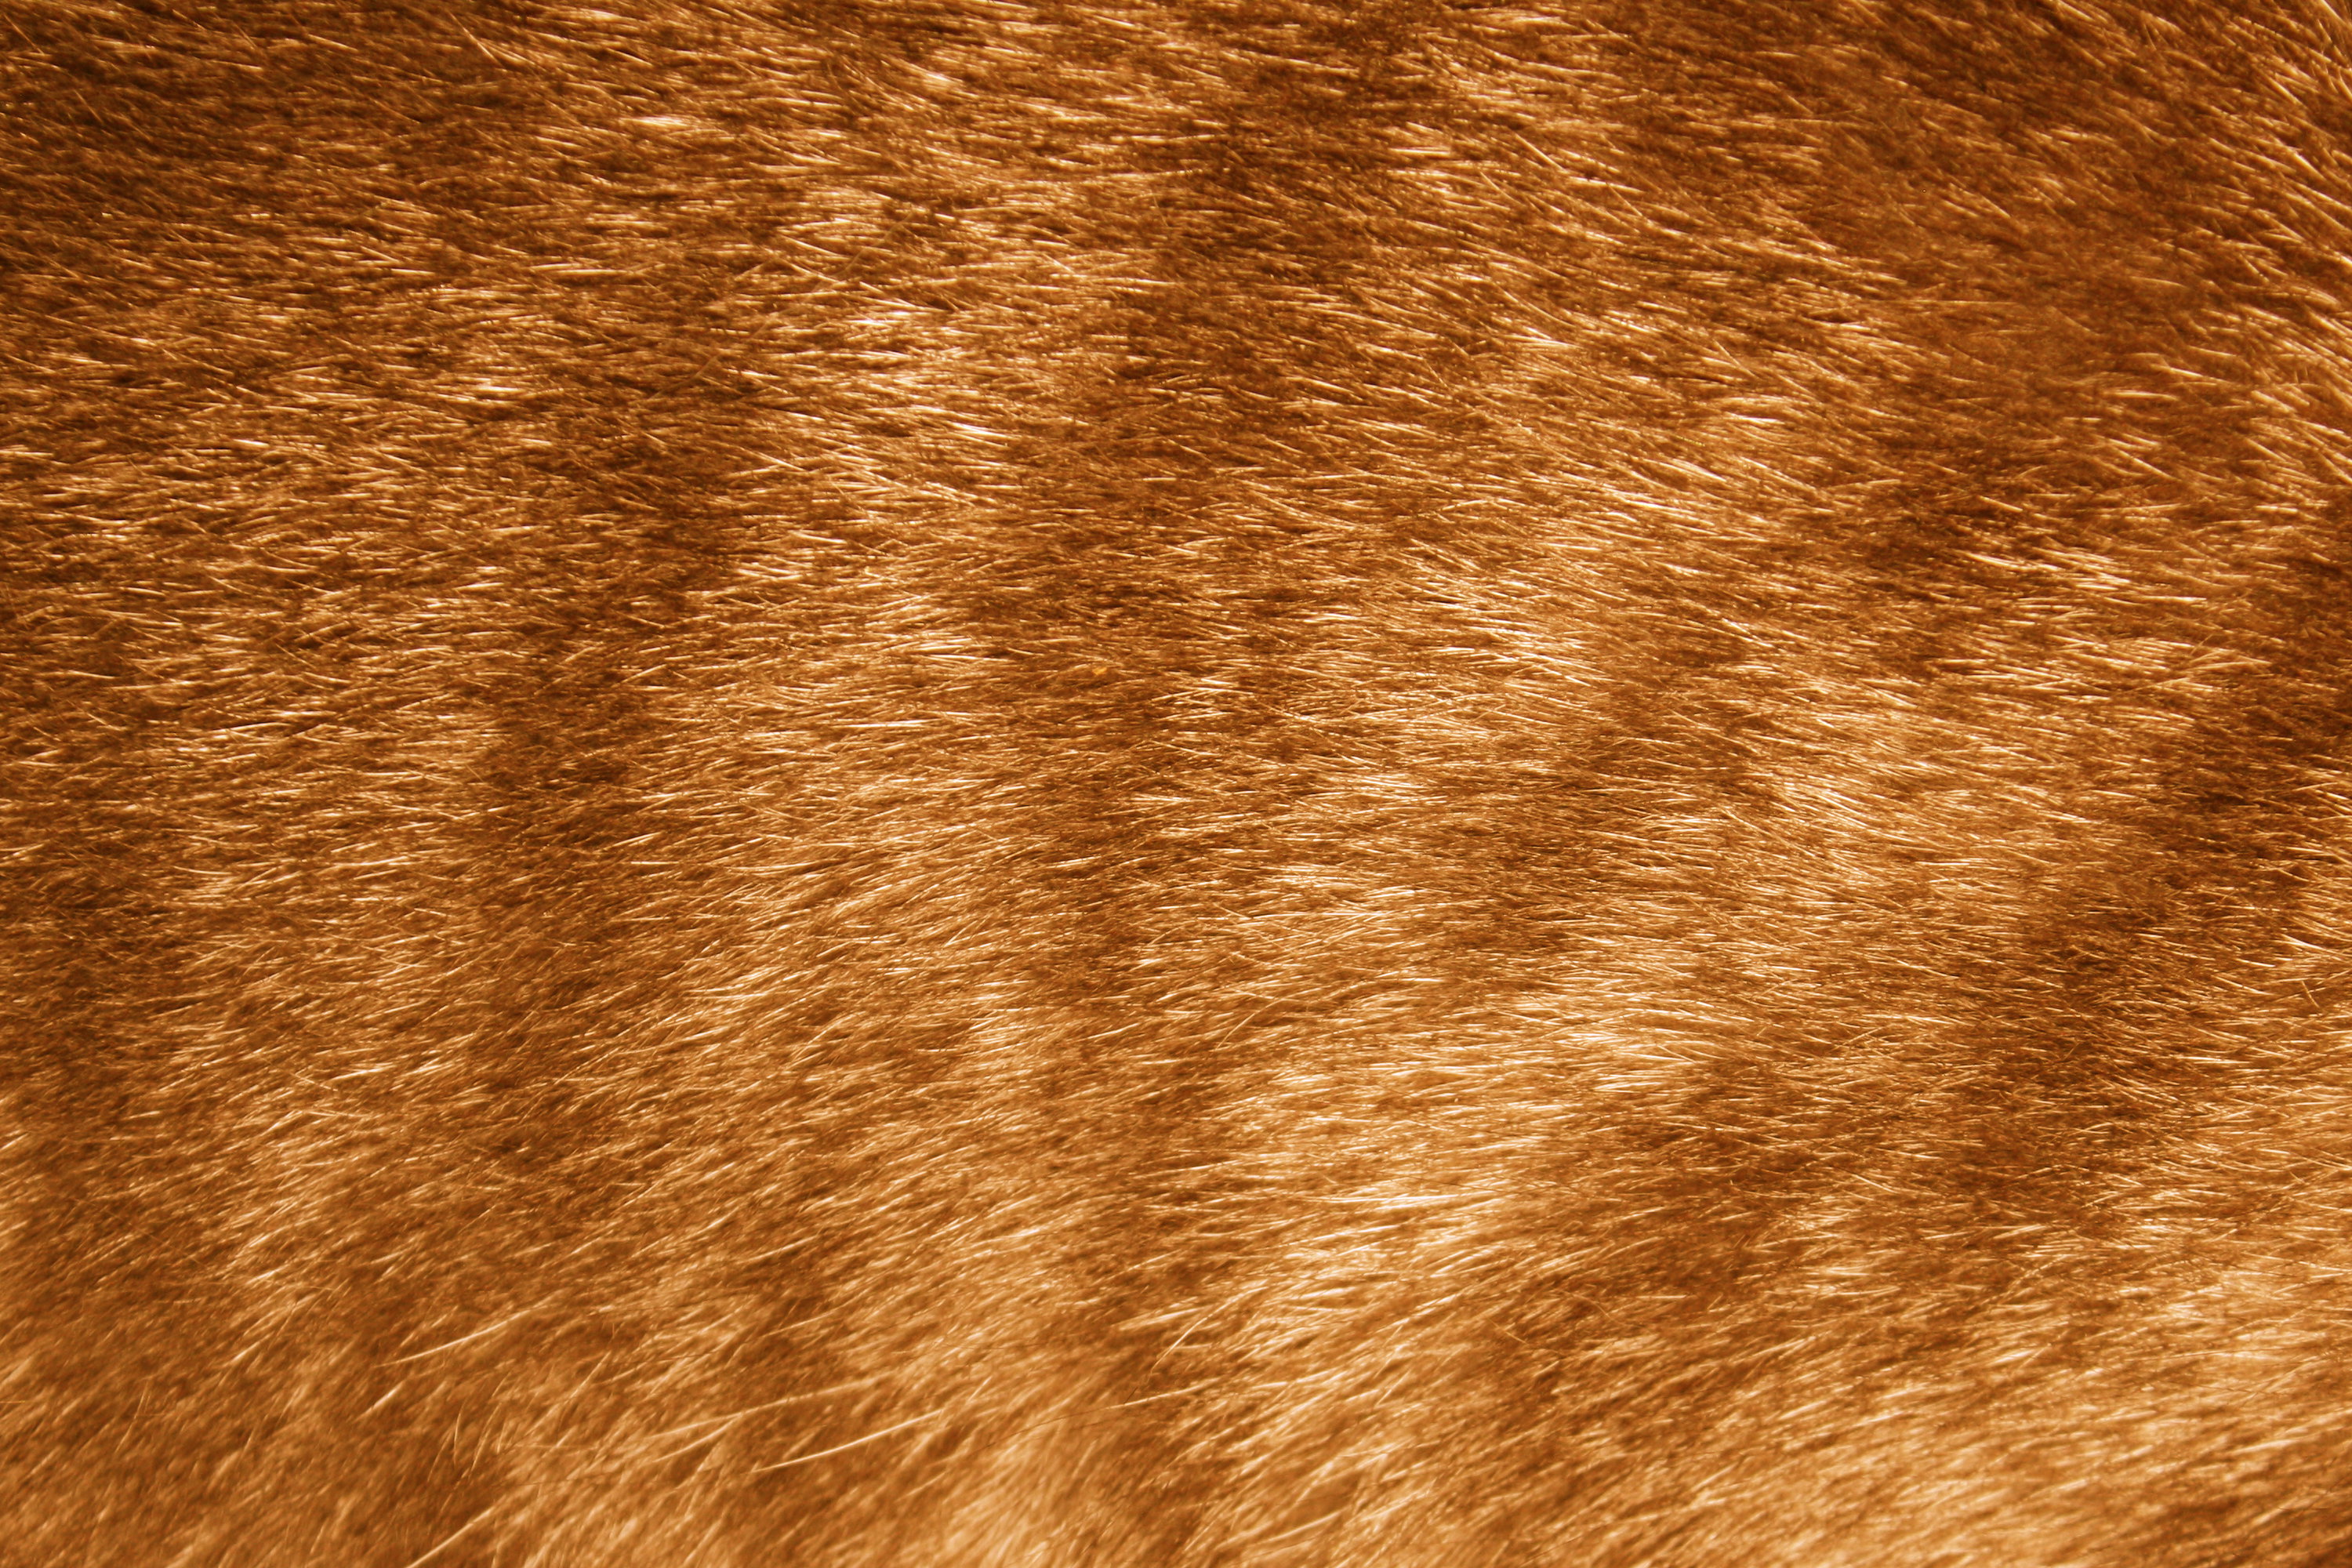 Orange Tabby Fur Texture Picture.